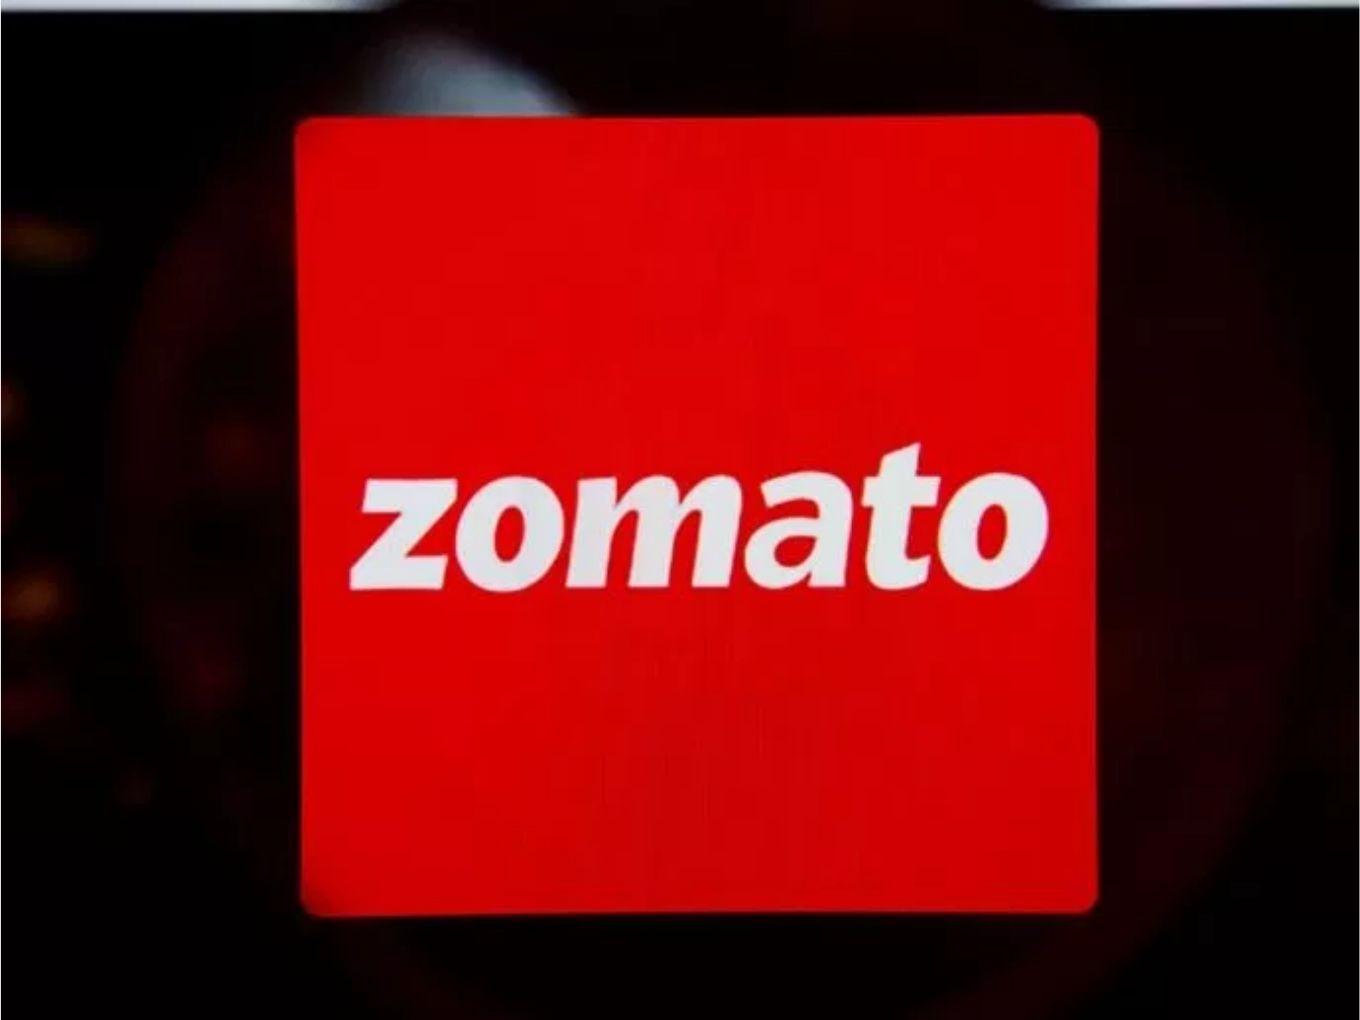 Ahead of Amazon's Entry Zomato Slashes Down Cash Burn By Half